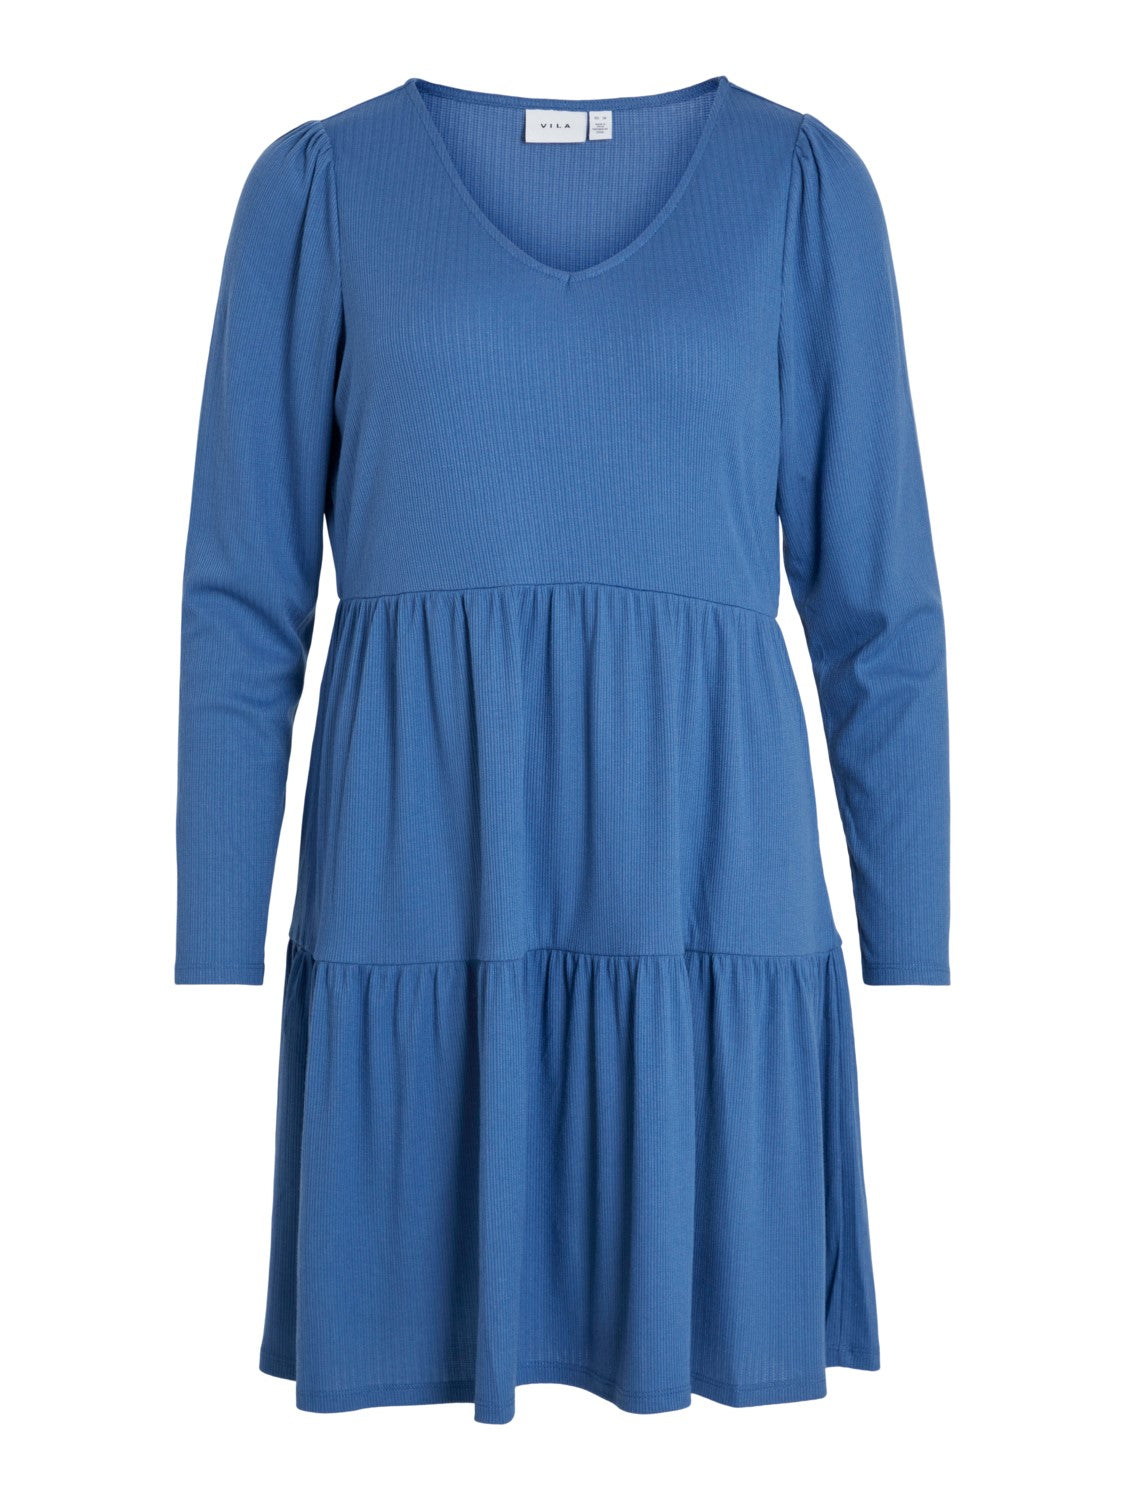 Bania Dress (Federal Blue)